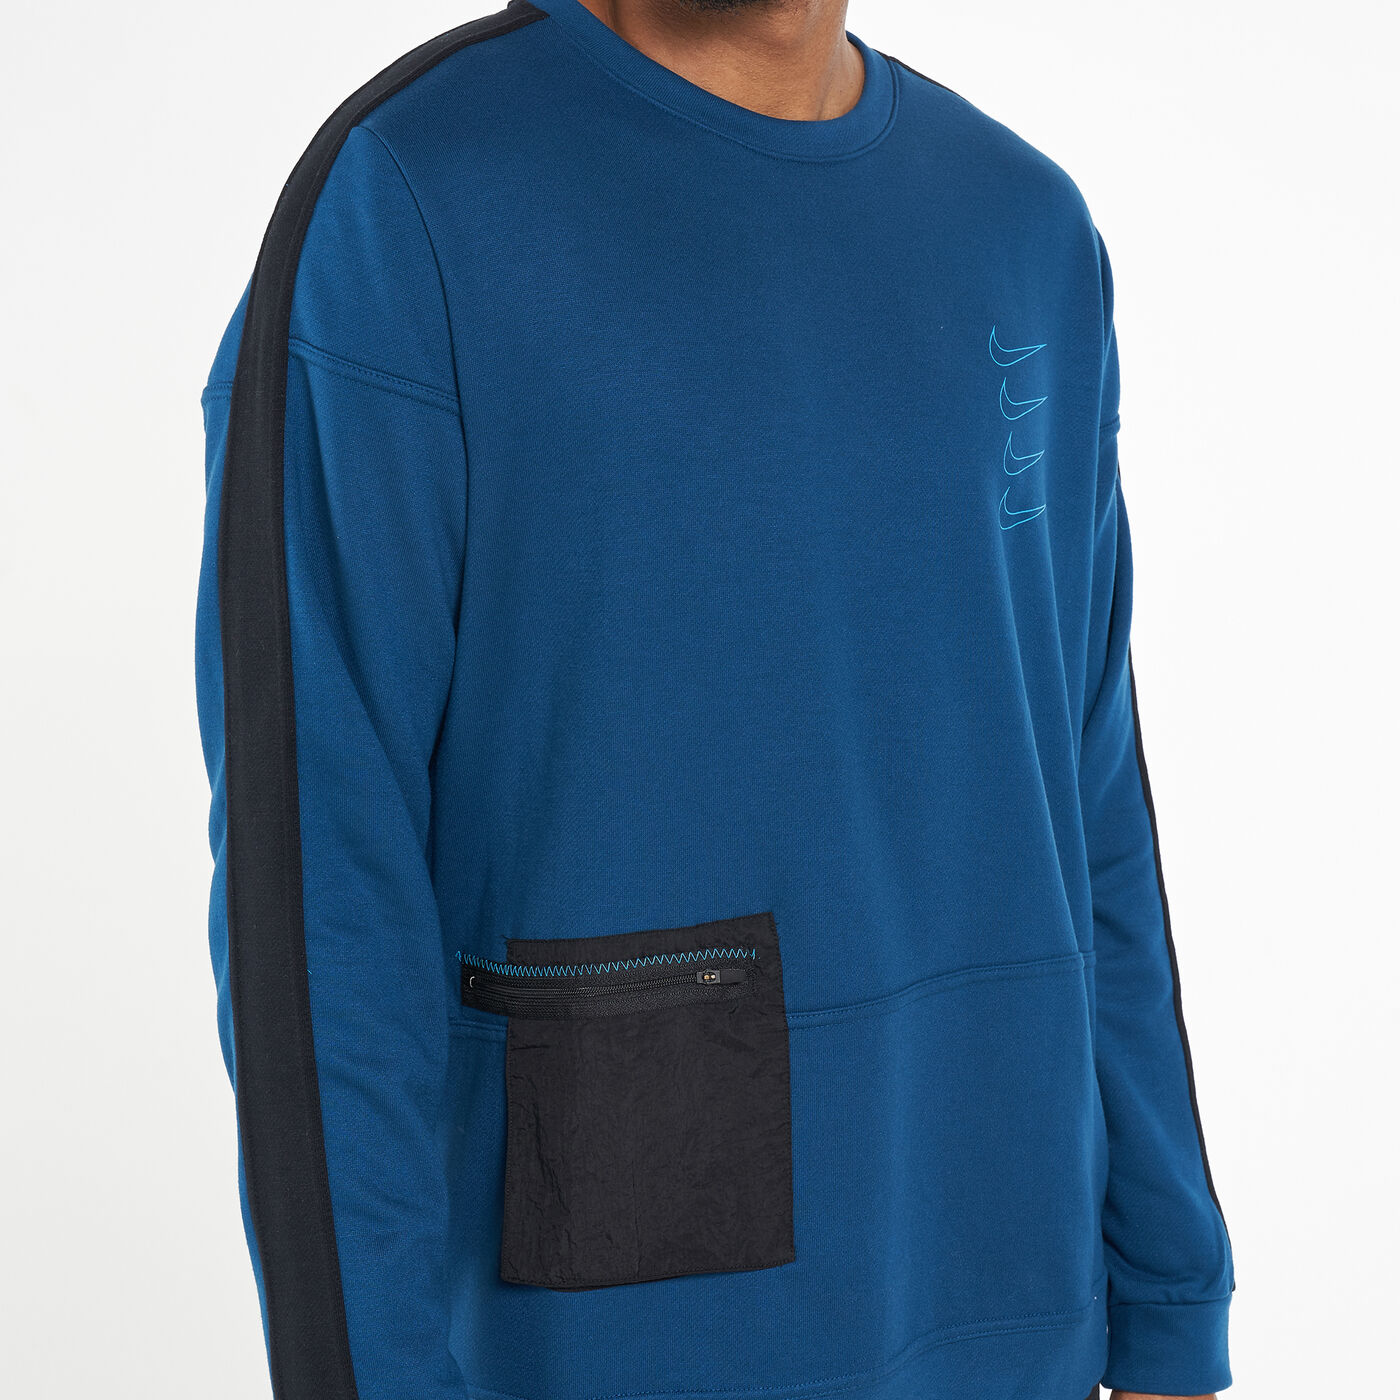 Men's Dri-FIT Project X Fleece Sweatshirt